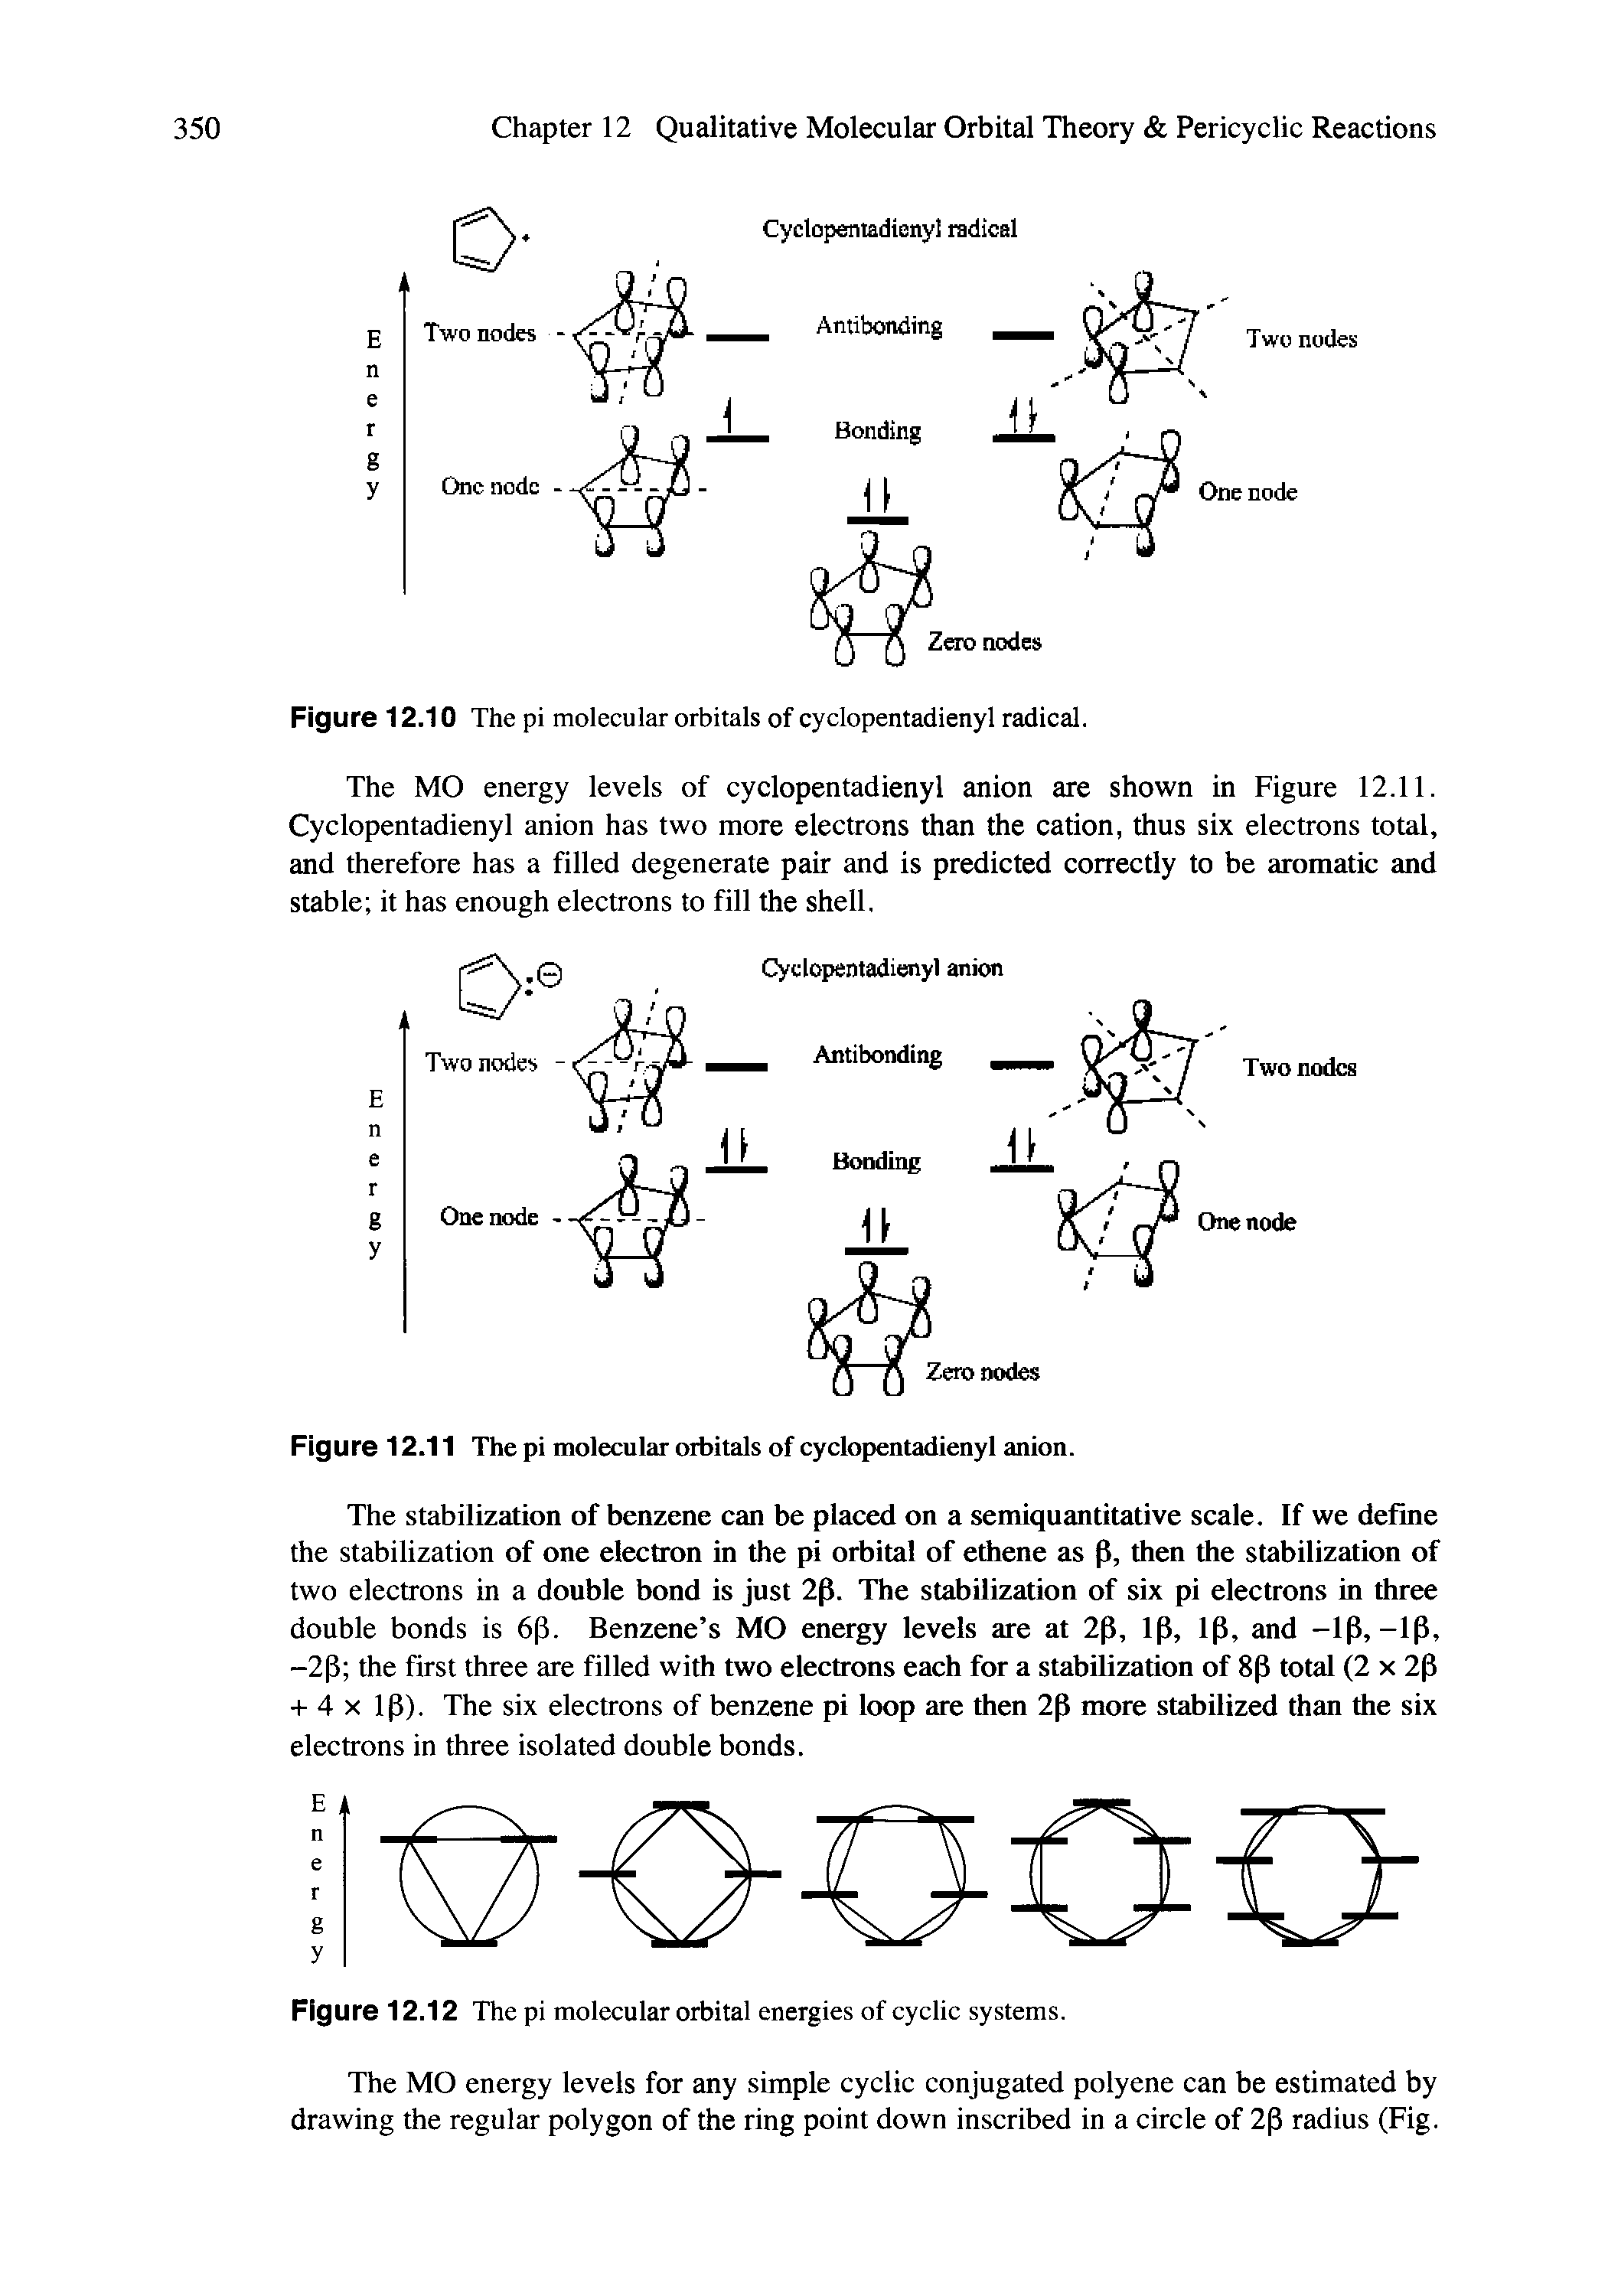 Figure 12.12 The pi molecular orbital energies of cyclic systems.